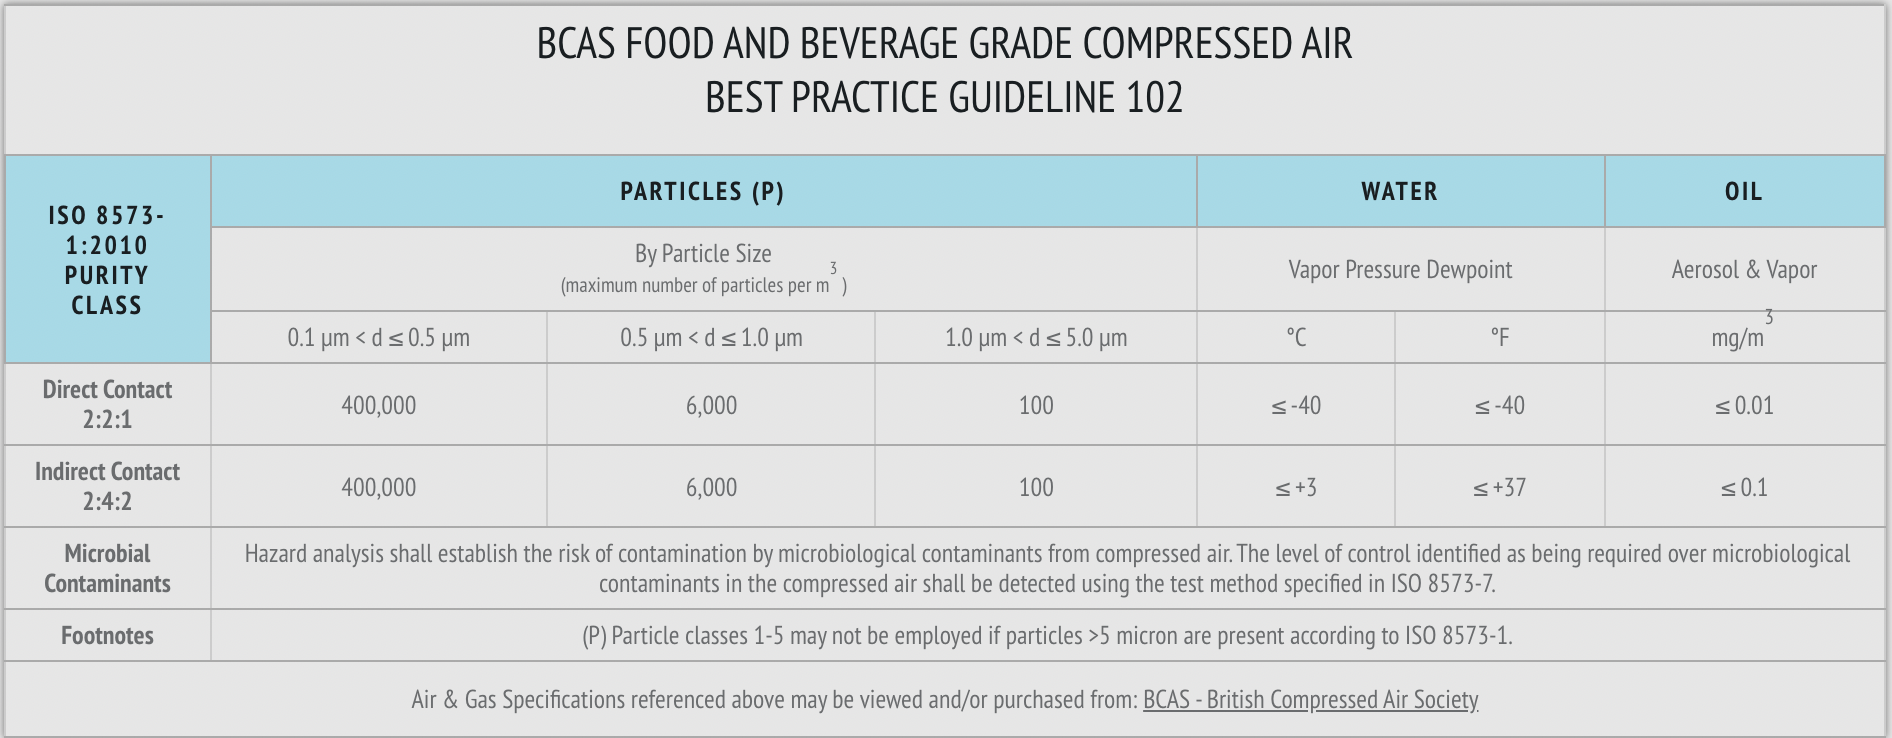 BCAS Food and Beverage Compressed Air Best Practice Guide